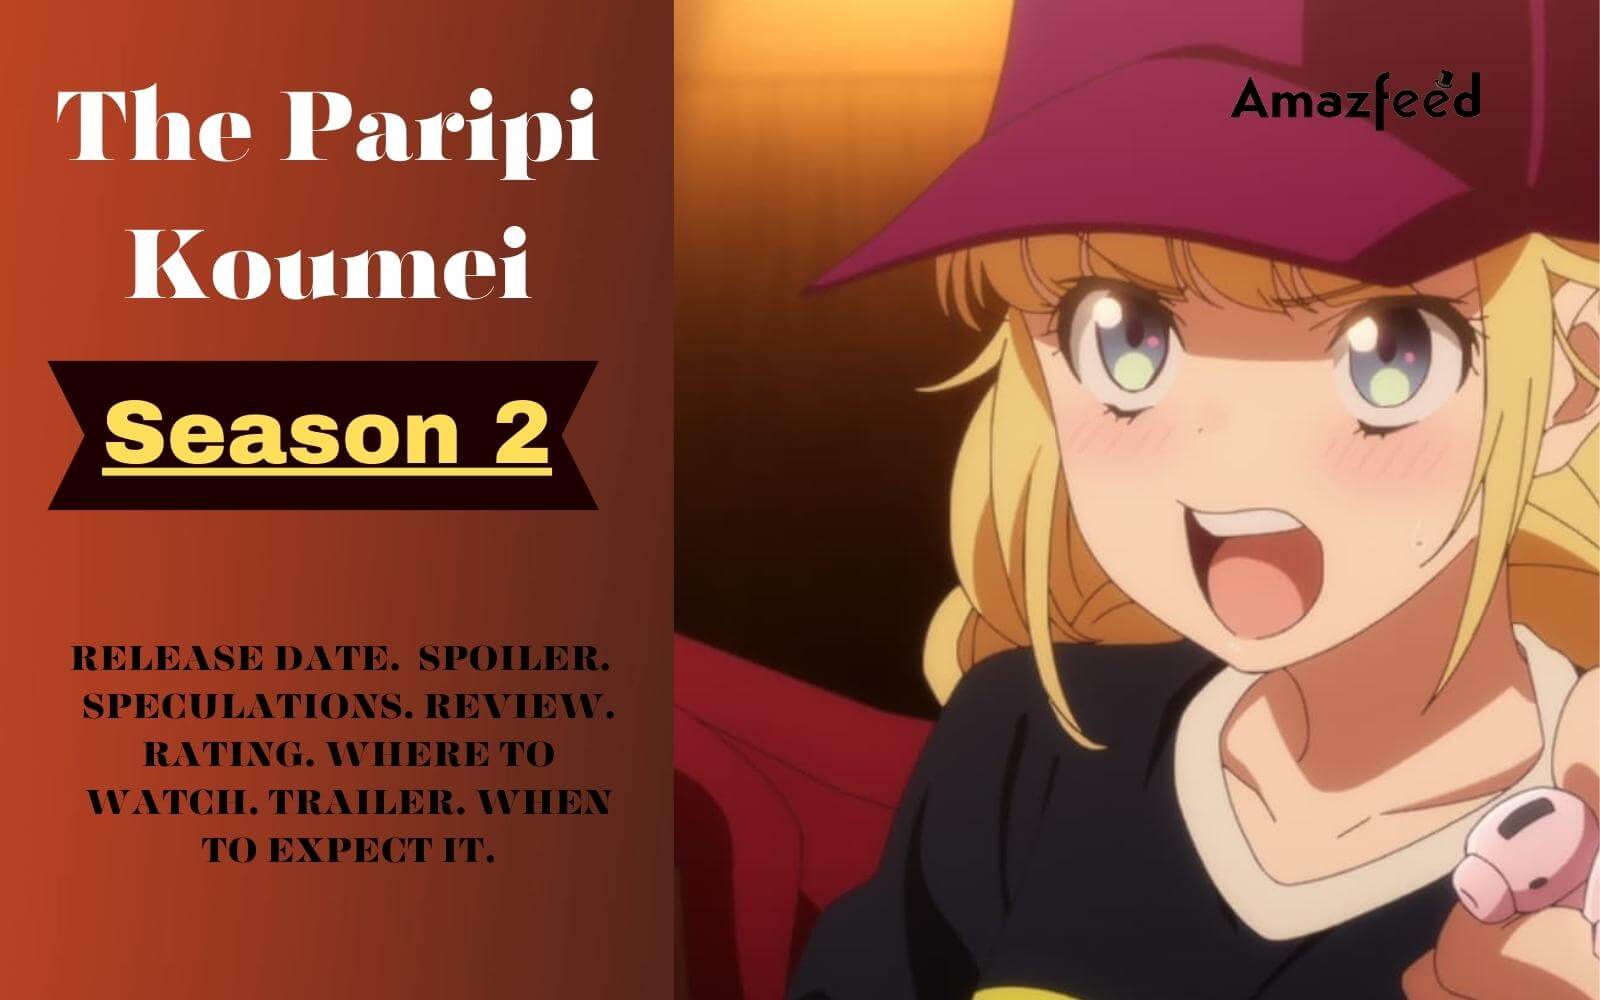 Petition · We Want Paripi Koumei Season 2 ·